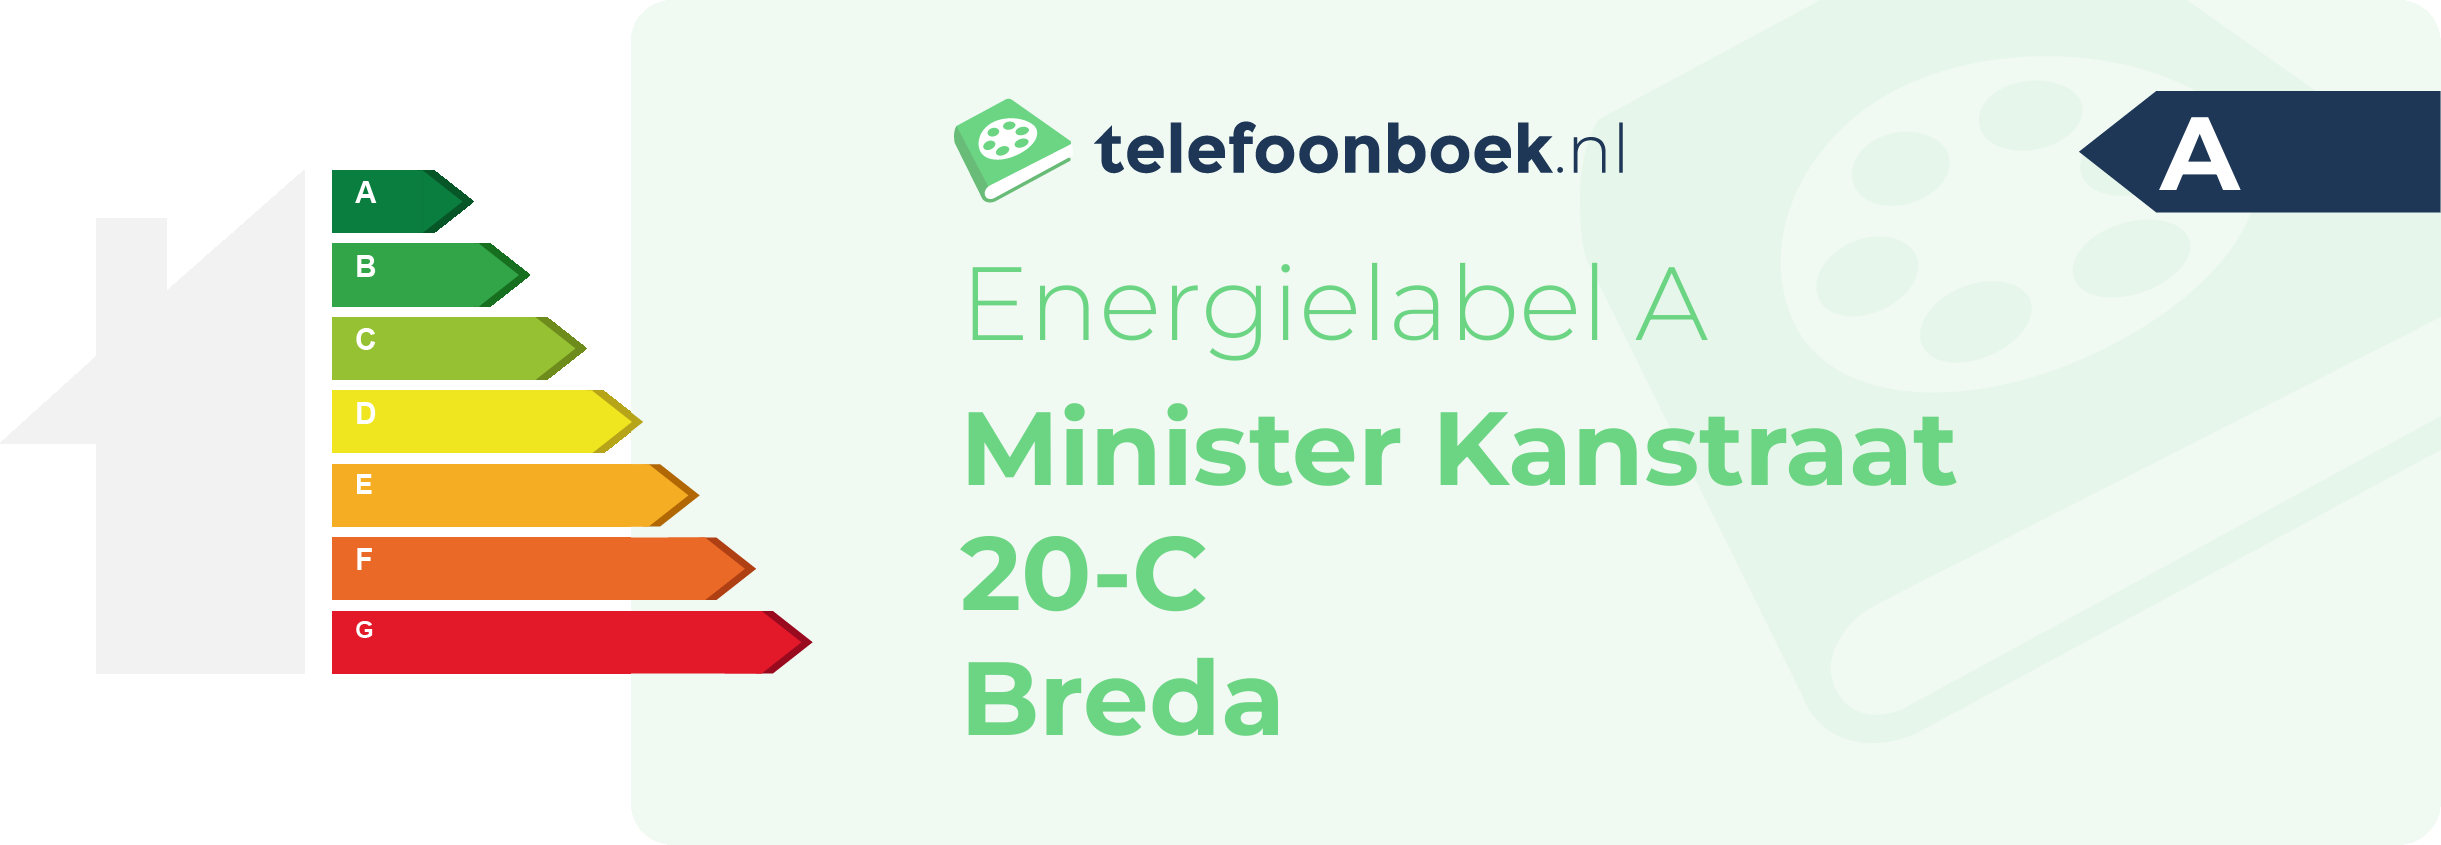 Energielabel Minister Kanstraat 20-C Breda